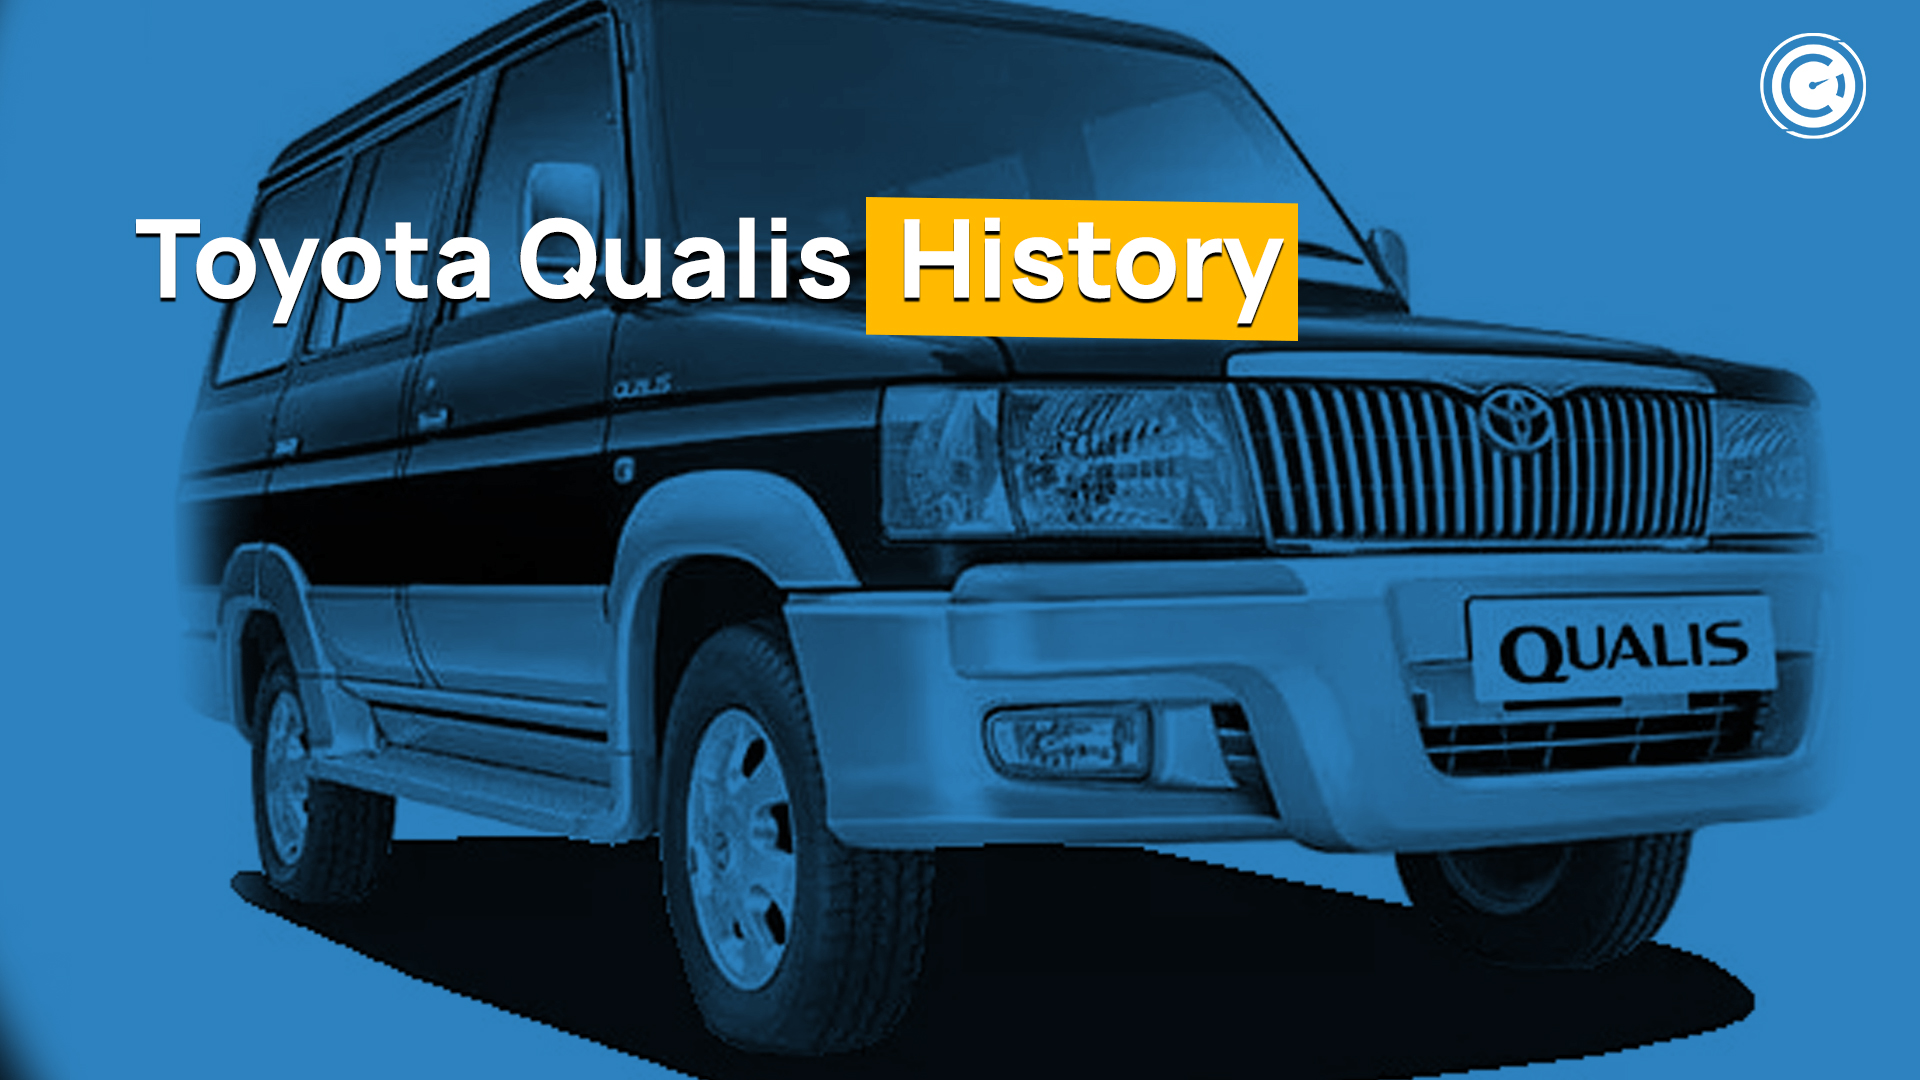 Toyota Qualis History